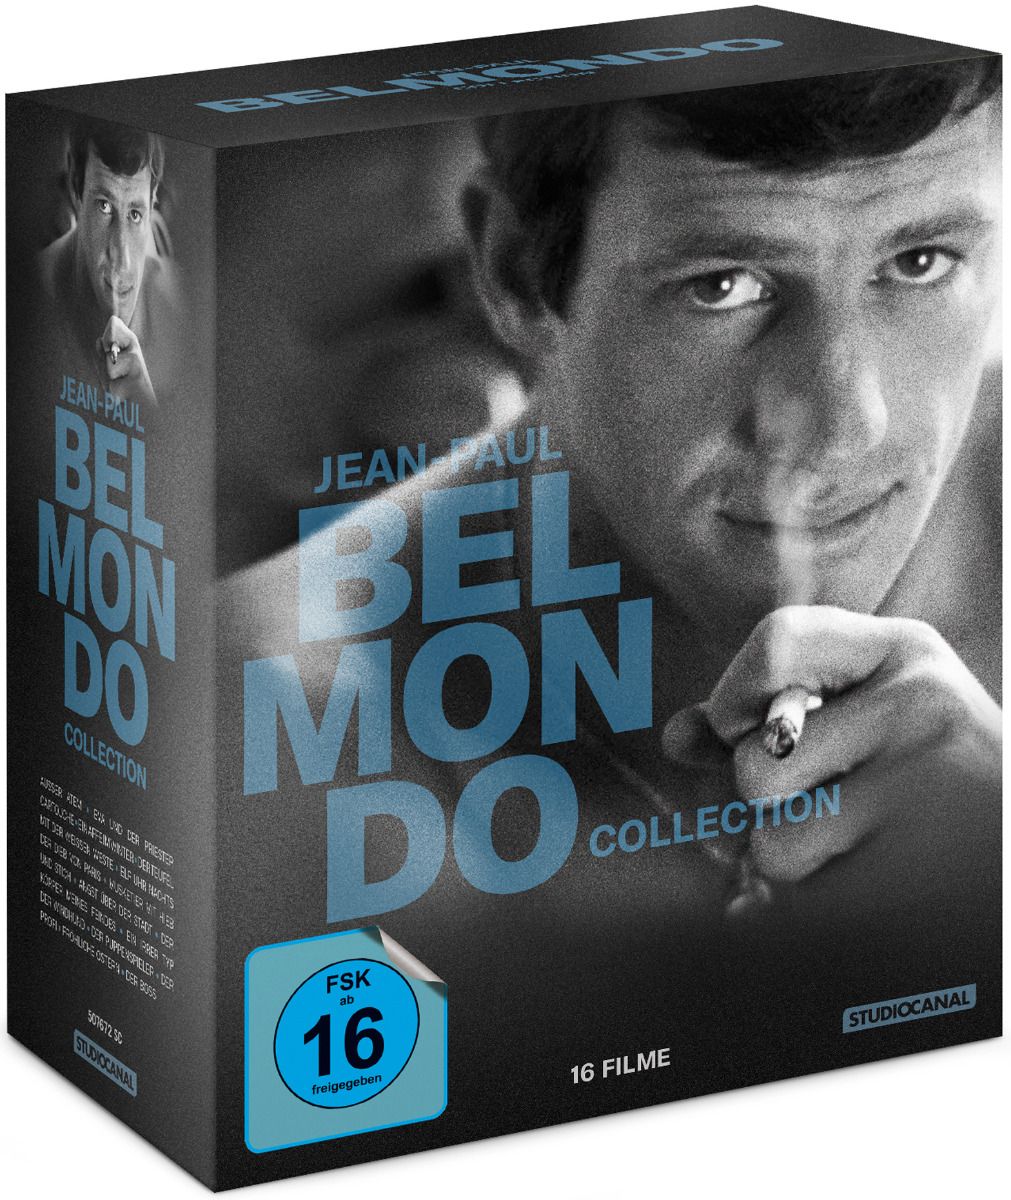 Jean-Paul Belmondo Collection (Blu-Ray) (16 Discs)